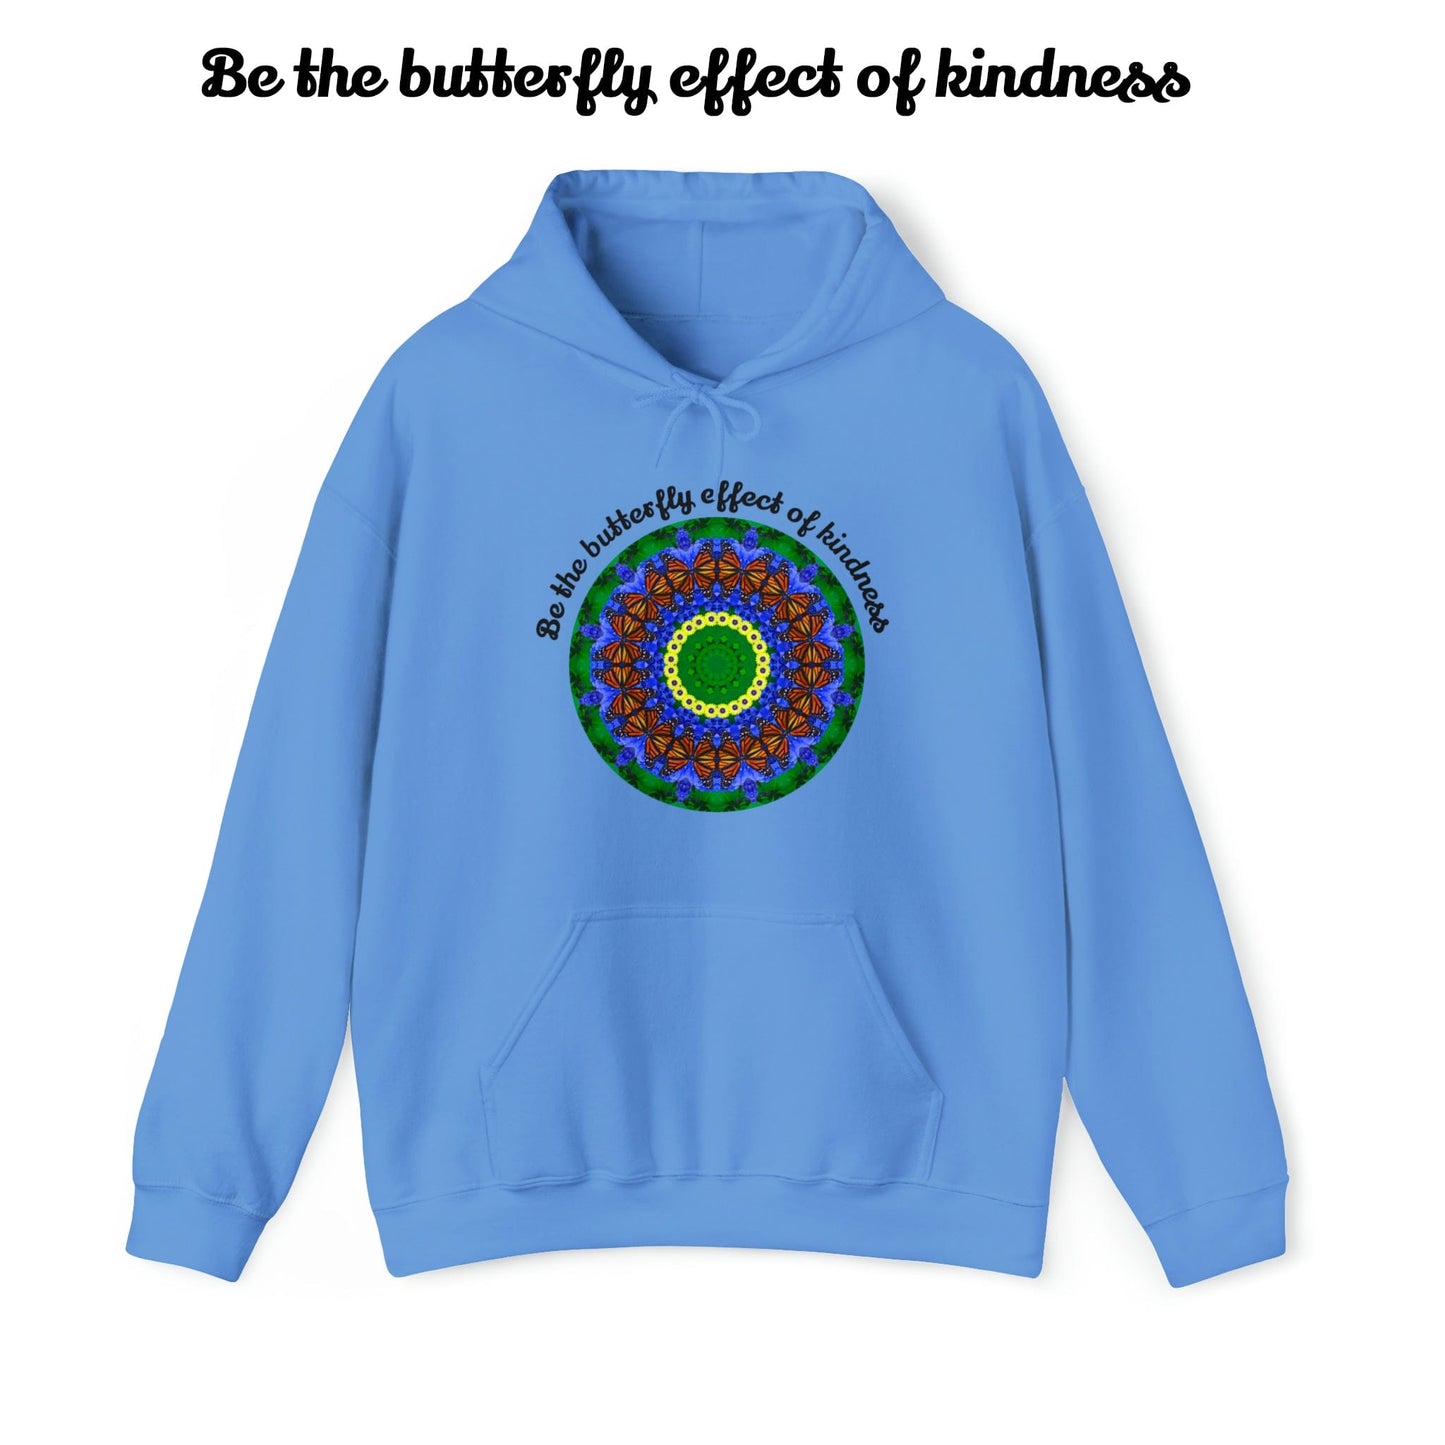 Pretty & Cute Butterfly Kindness Graphic Hoodie Sweatshirt - Monarch Butterfly Mandala Art - Be the butterfly effect of kindness flat columbia blue